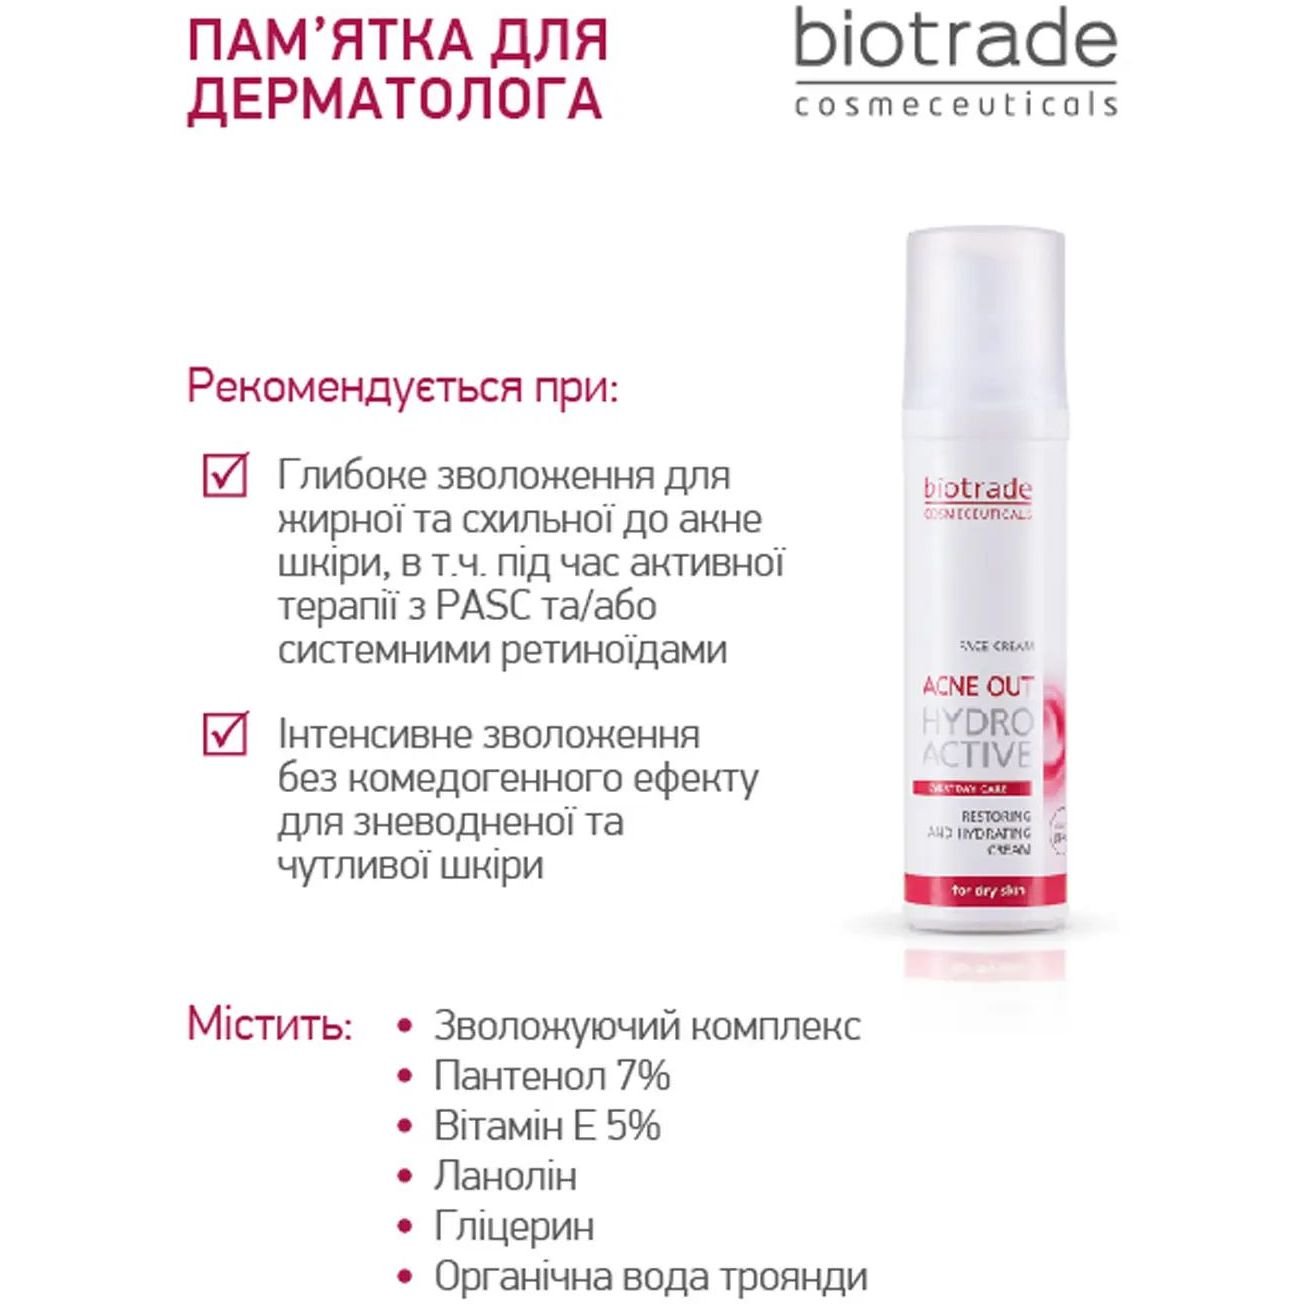 Увлажняющий крем для лица Biotrade Biotrade Acne Out Hydro Active 60 мл (3800221840396) - фото 4